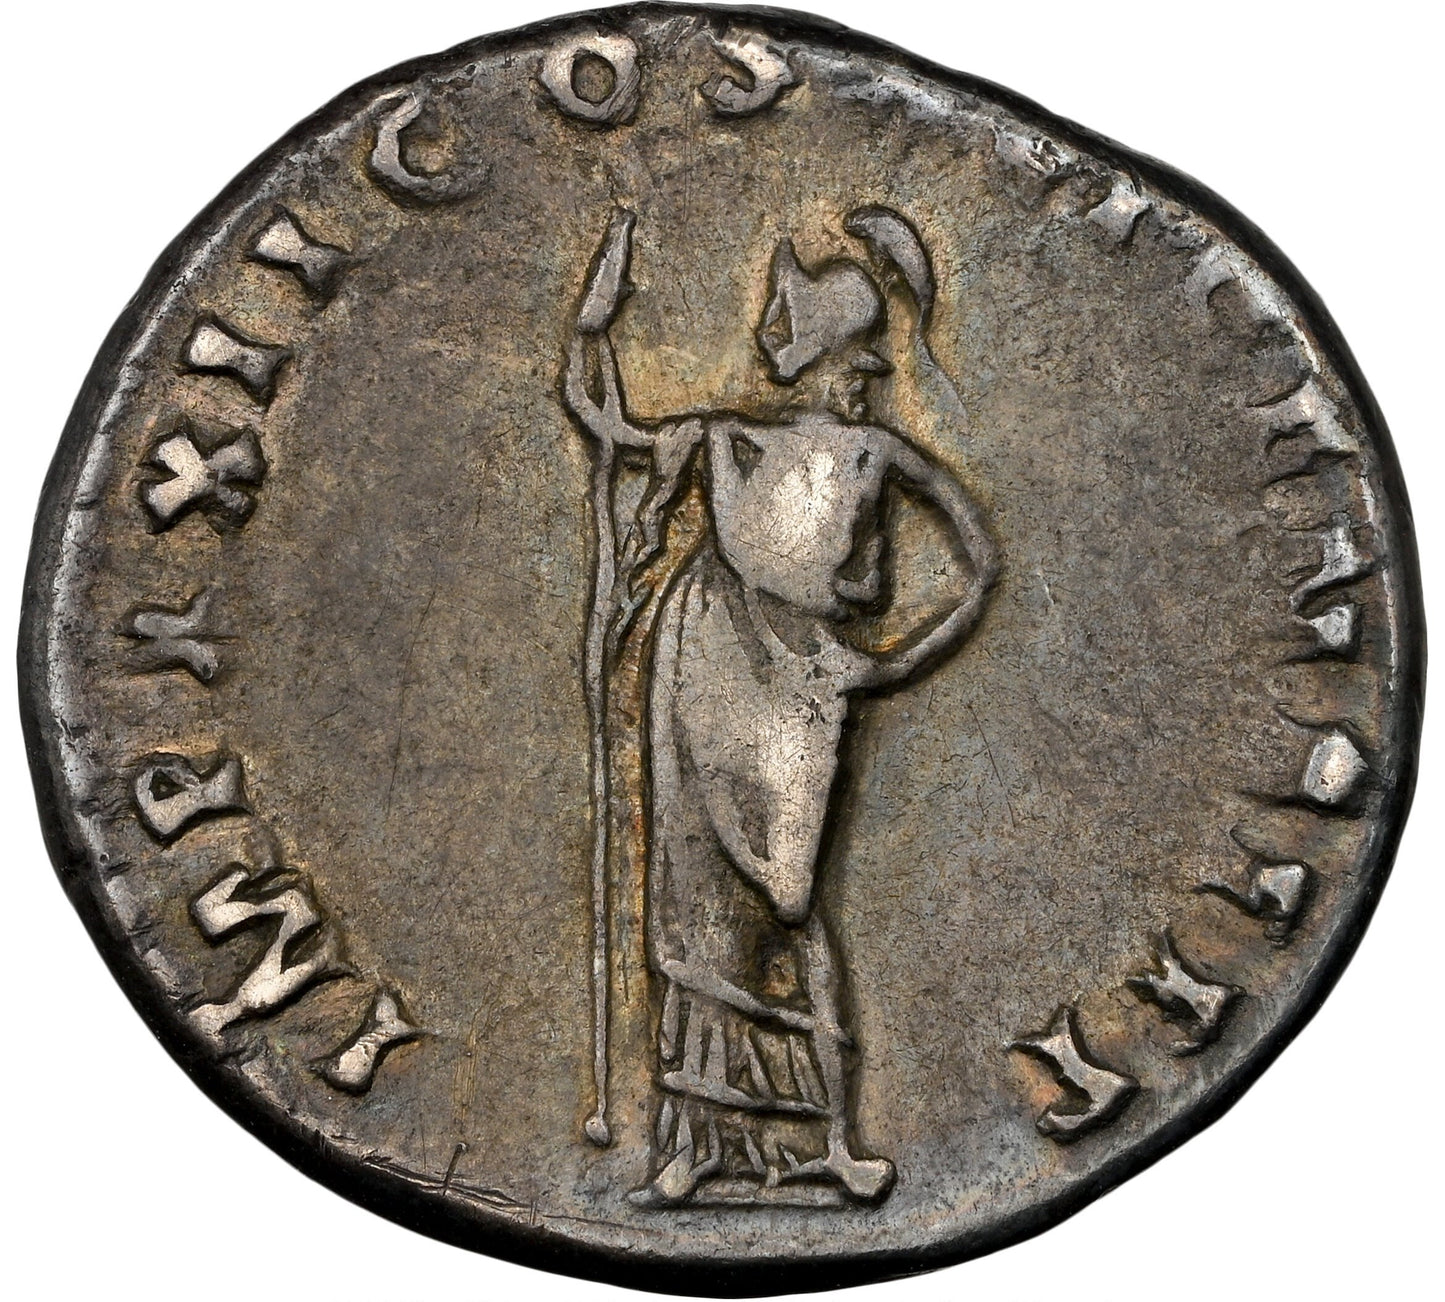 Roman Empire - Domitian - Silver Denarius - NGC Ch VF - RIC:742